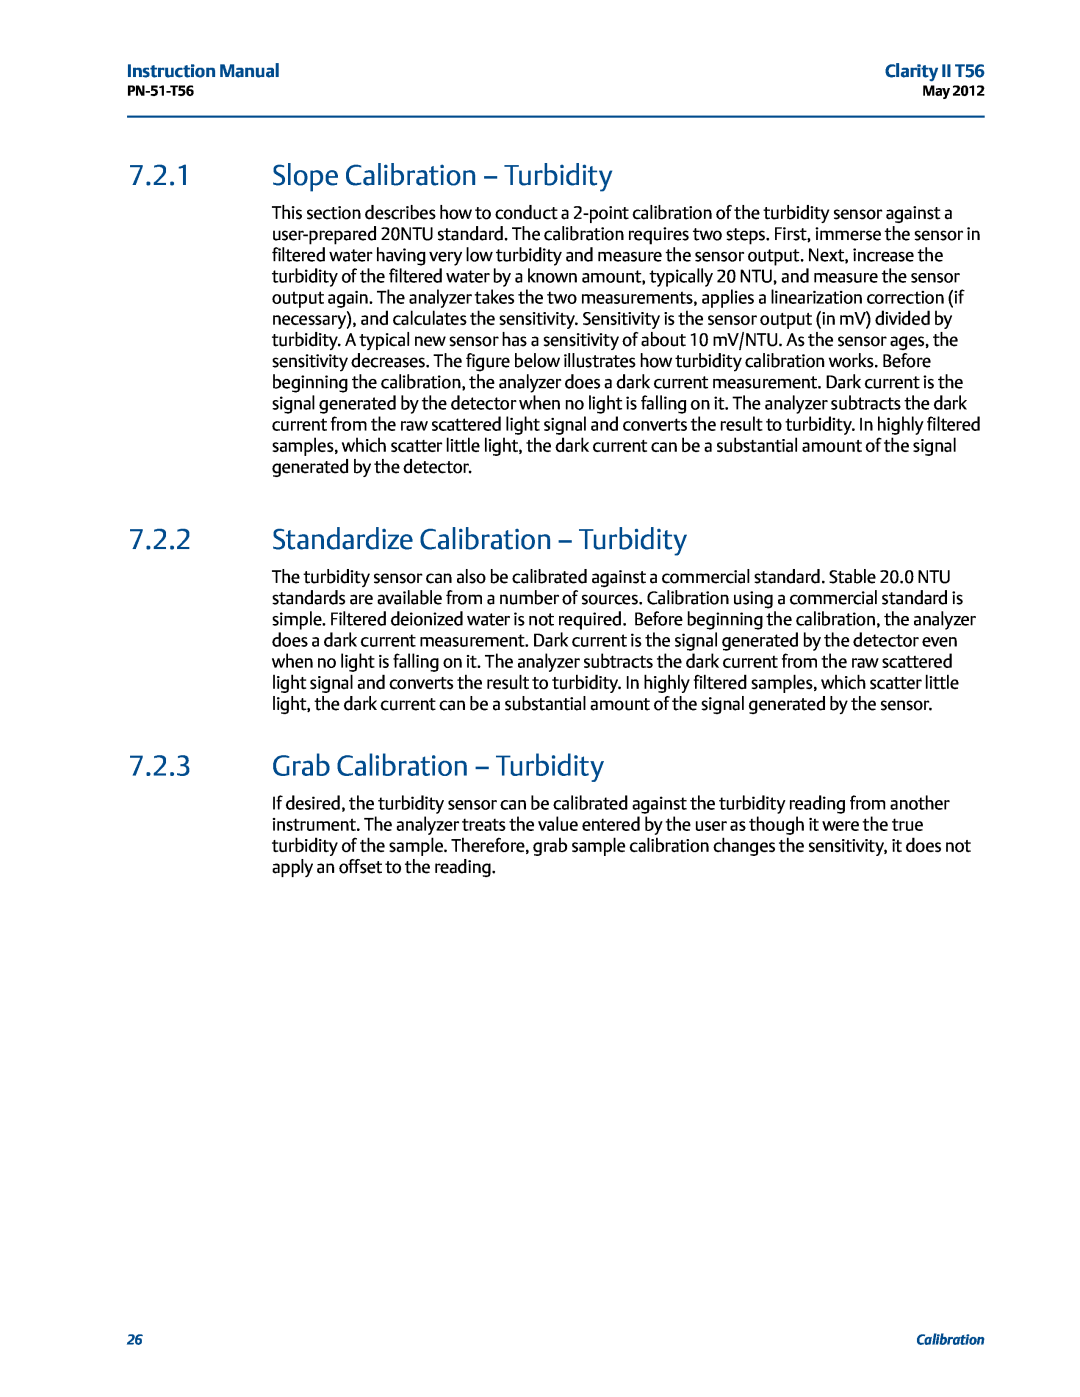 Emerson PN-51-T56 Slope Calibration - Turbidity, Standardize Calibration - Turbidity, Grab Calibration - Turbidity 